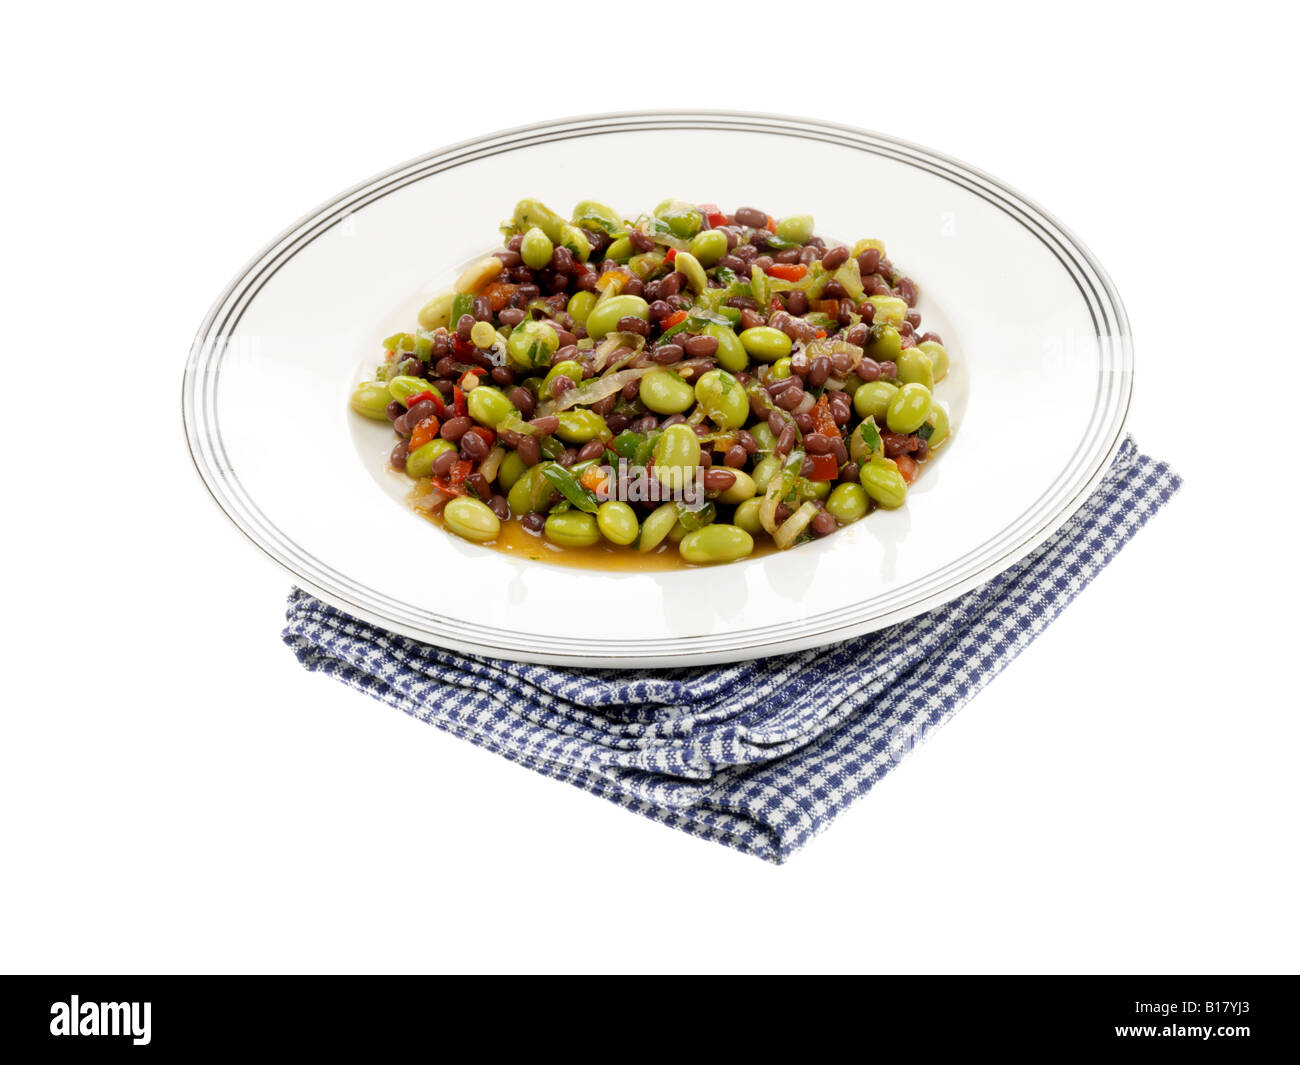 Adzuki and Edamame Bean Salad Stock Photo